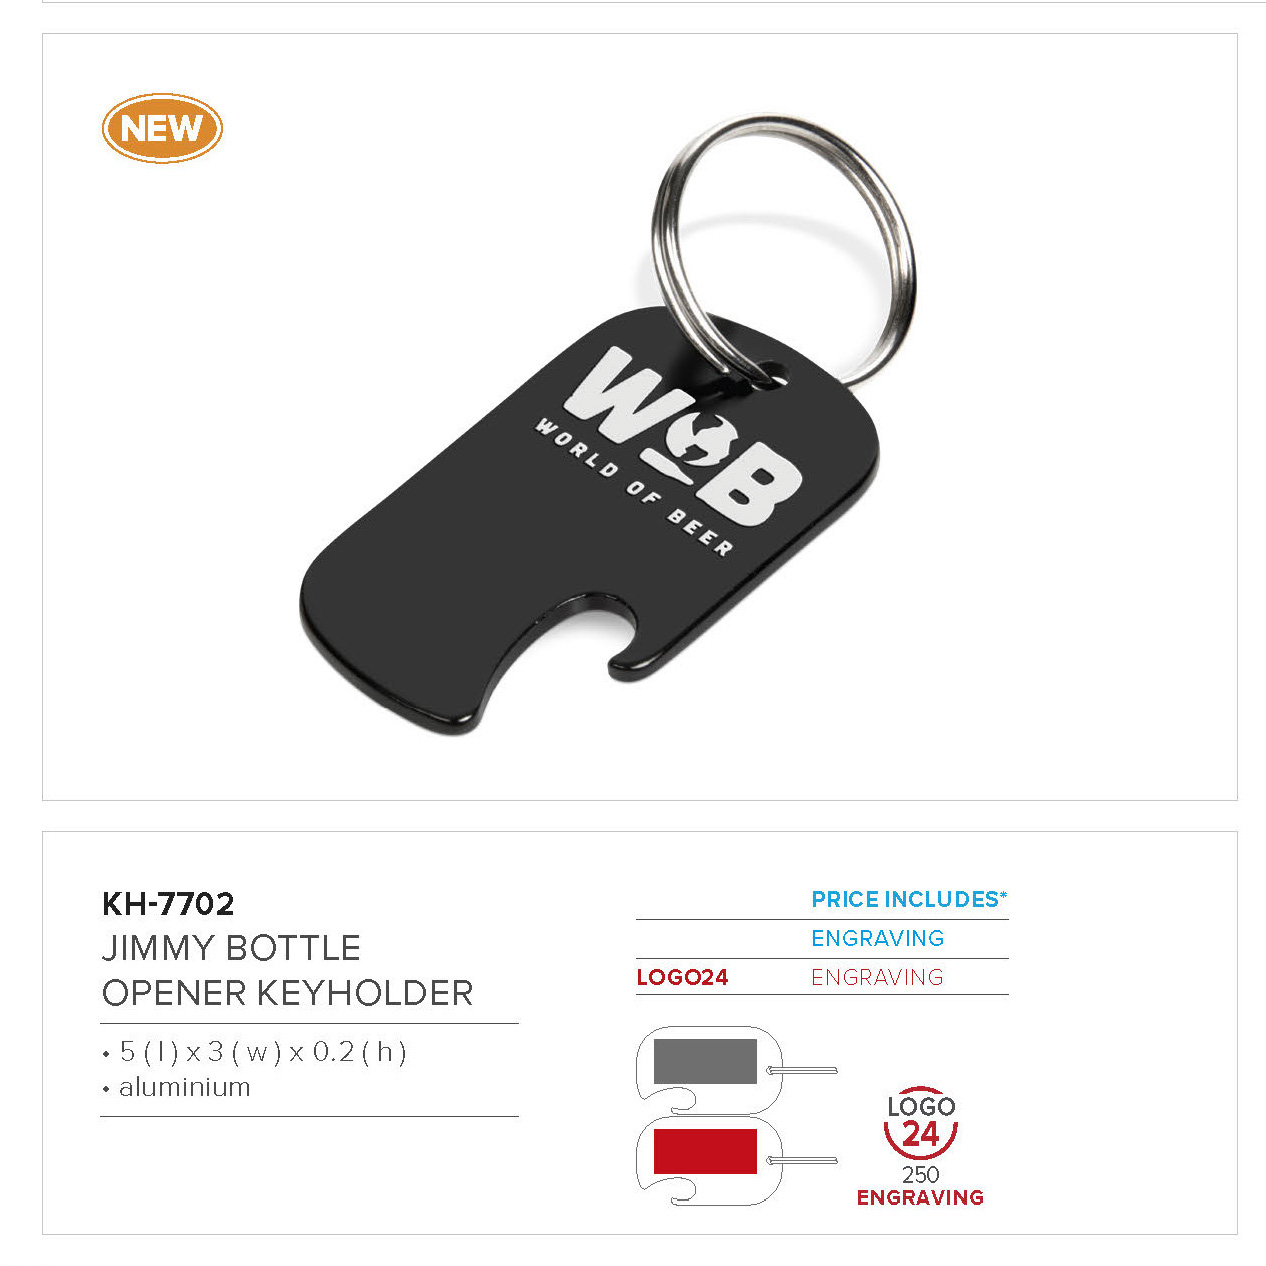 KH-7702 - Jimmy Bottle Opener Keyholder - Catalogue Image